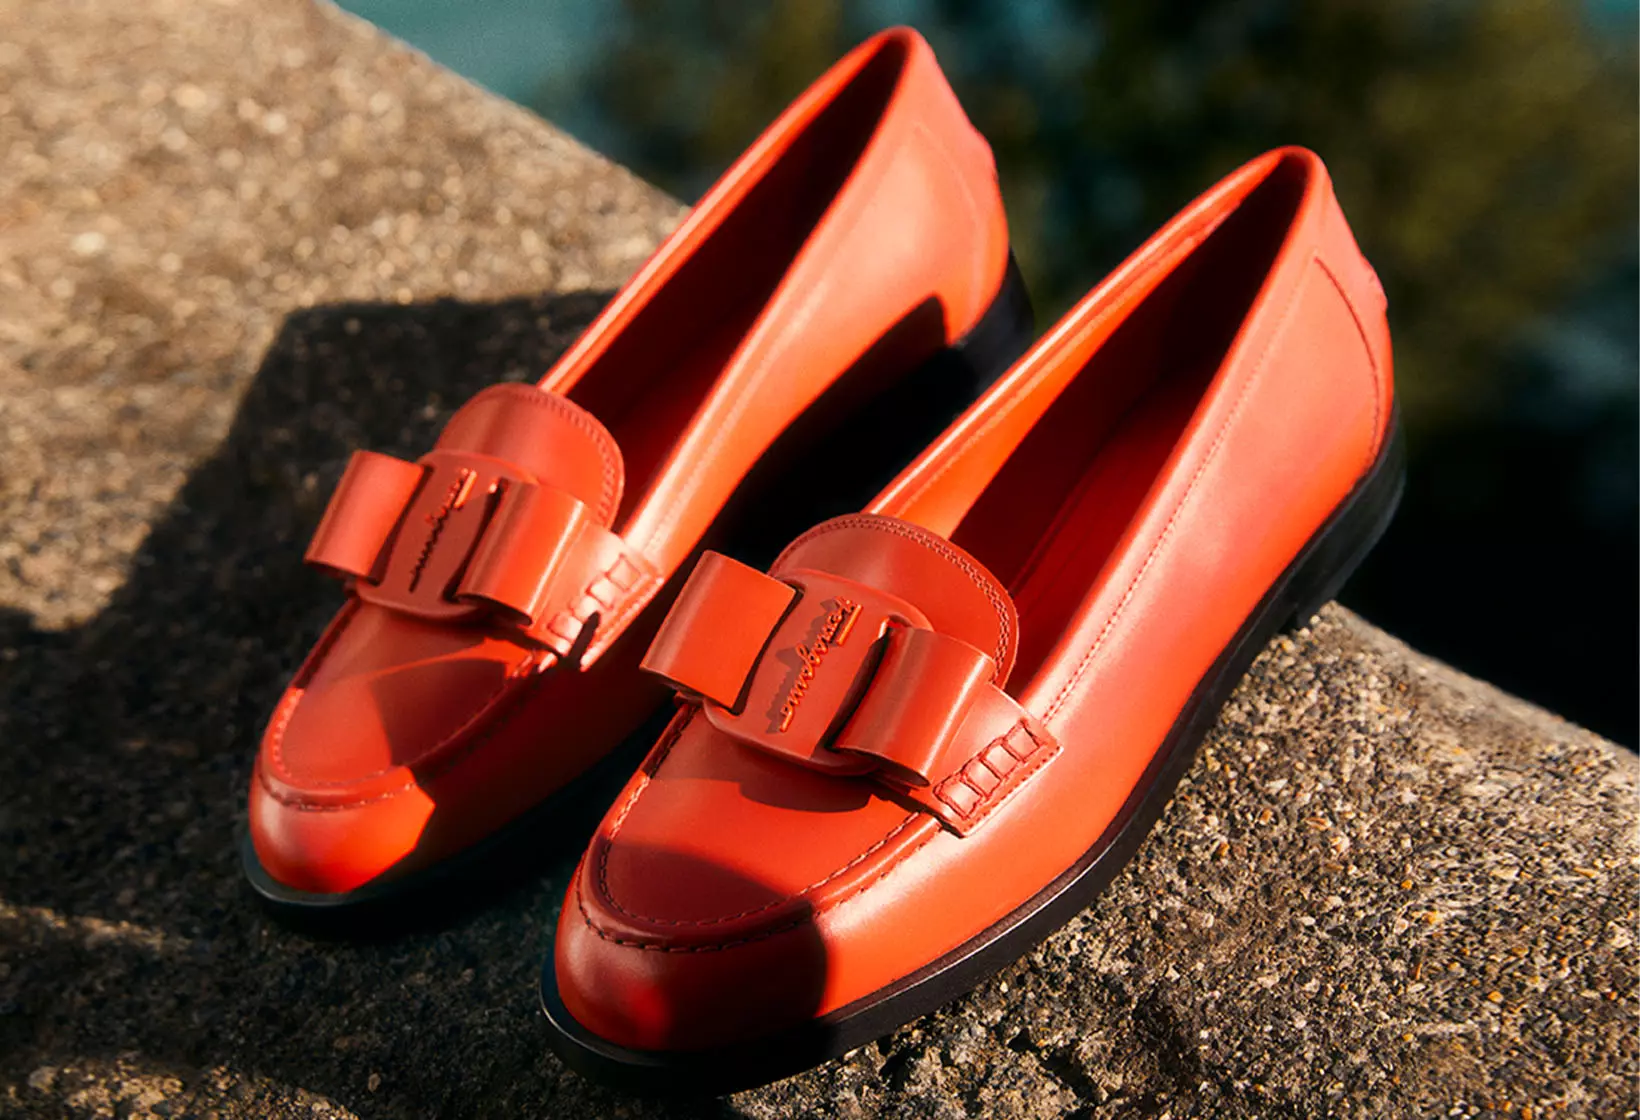 The Best Salvatore Ferragamo Shoes For Women for Editorialist